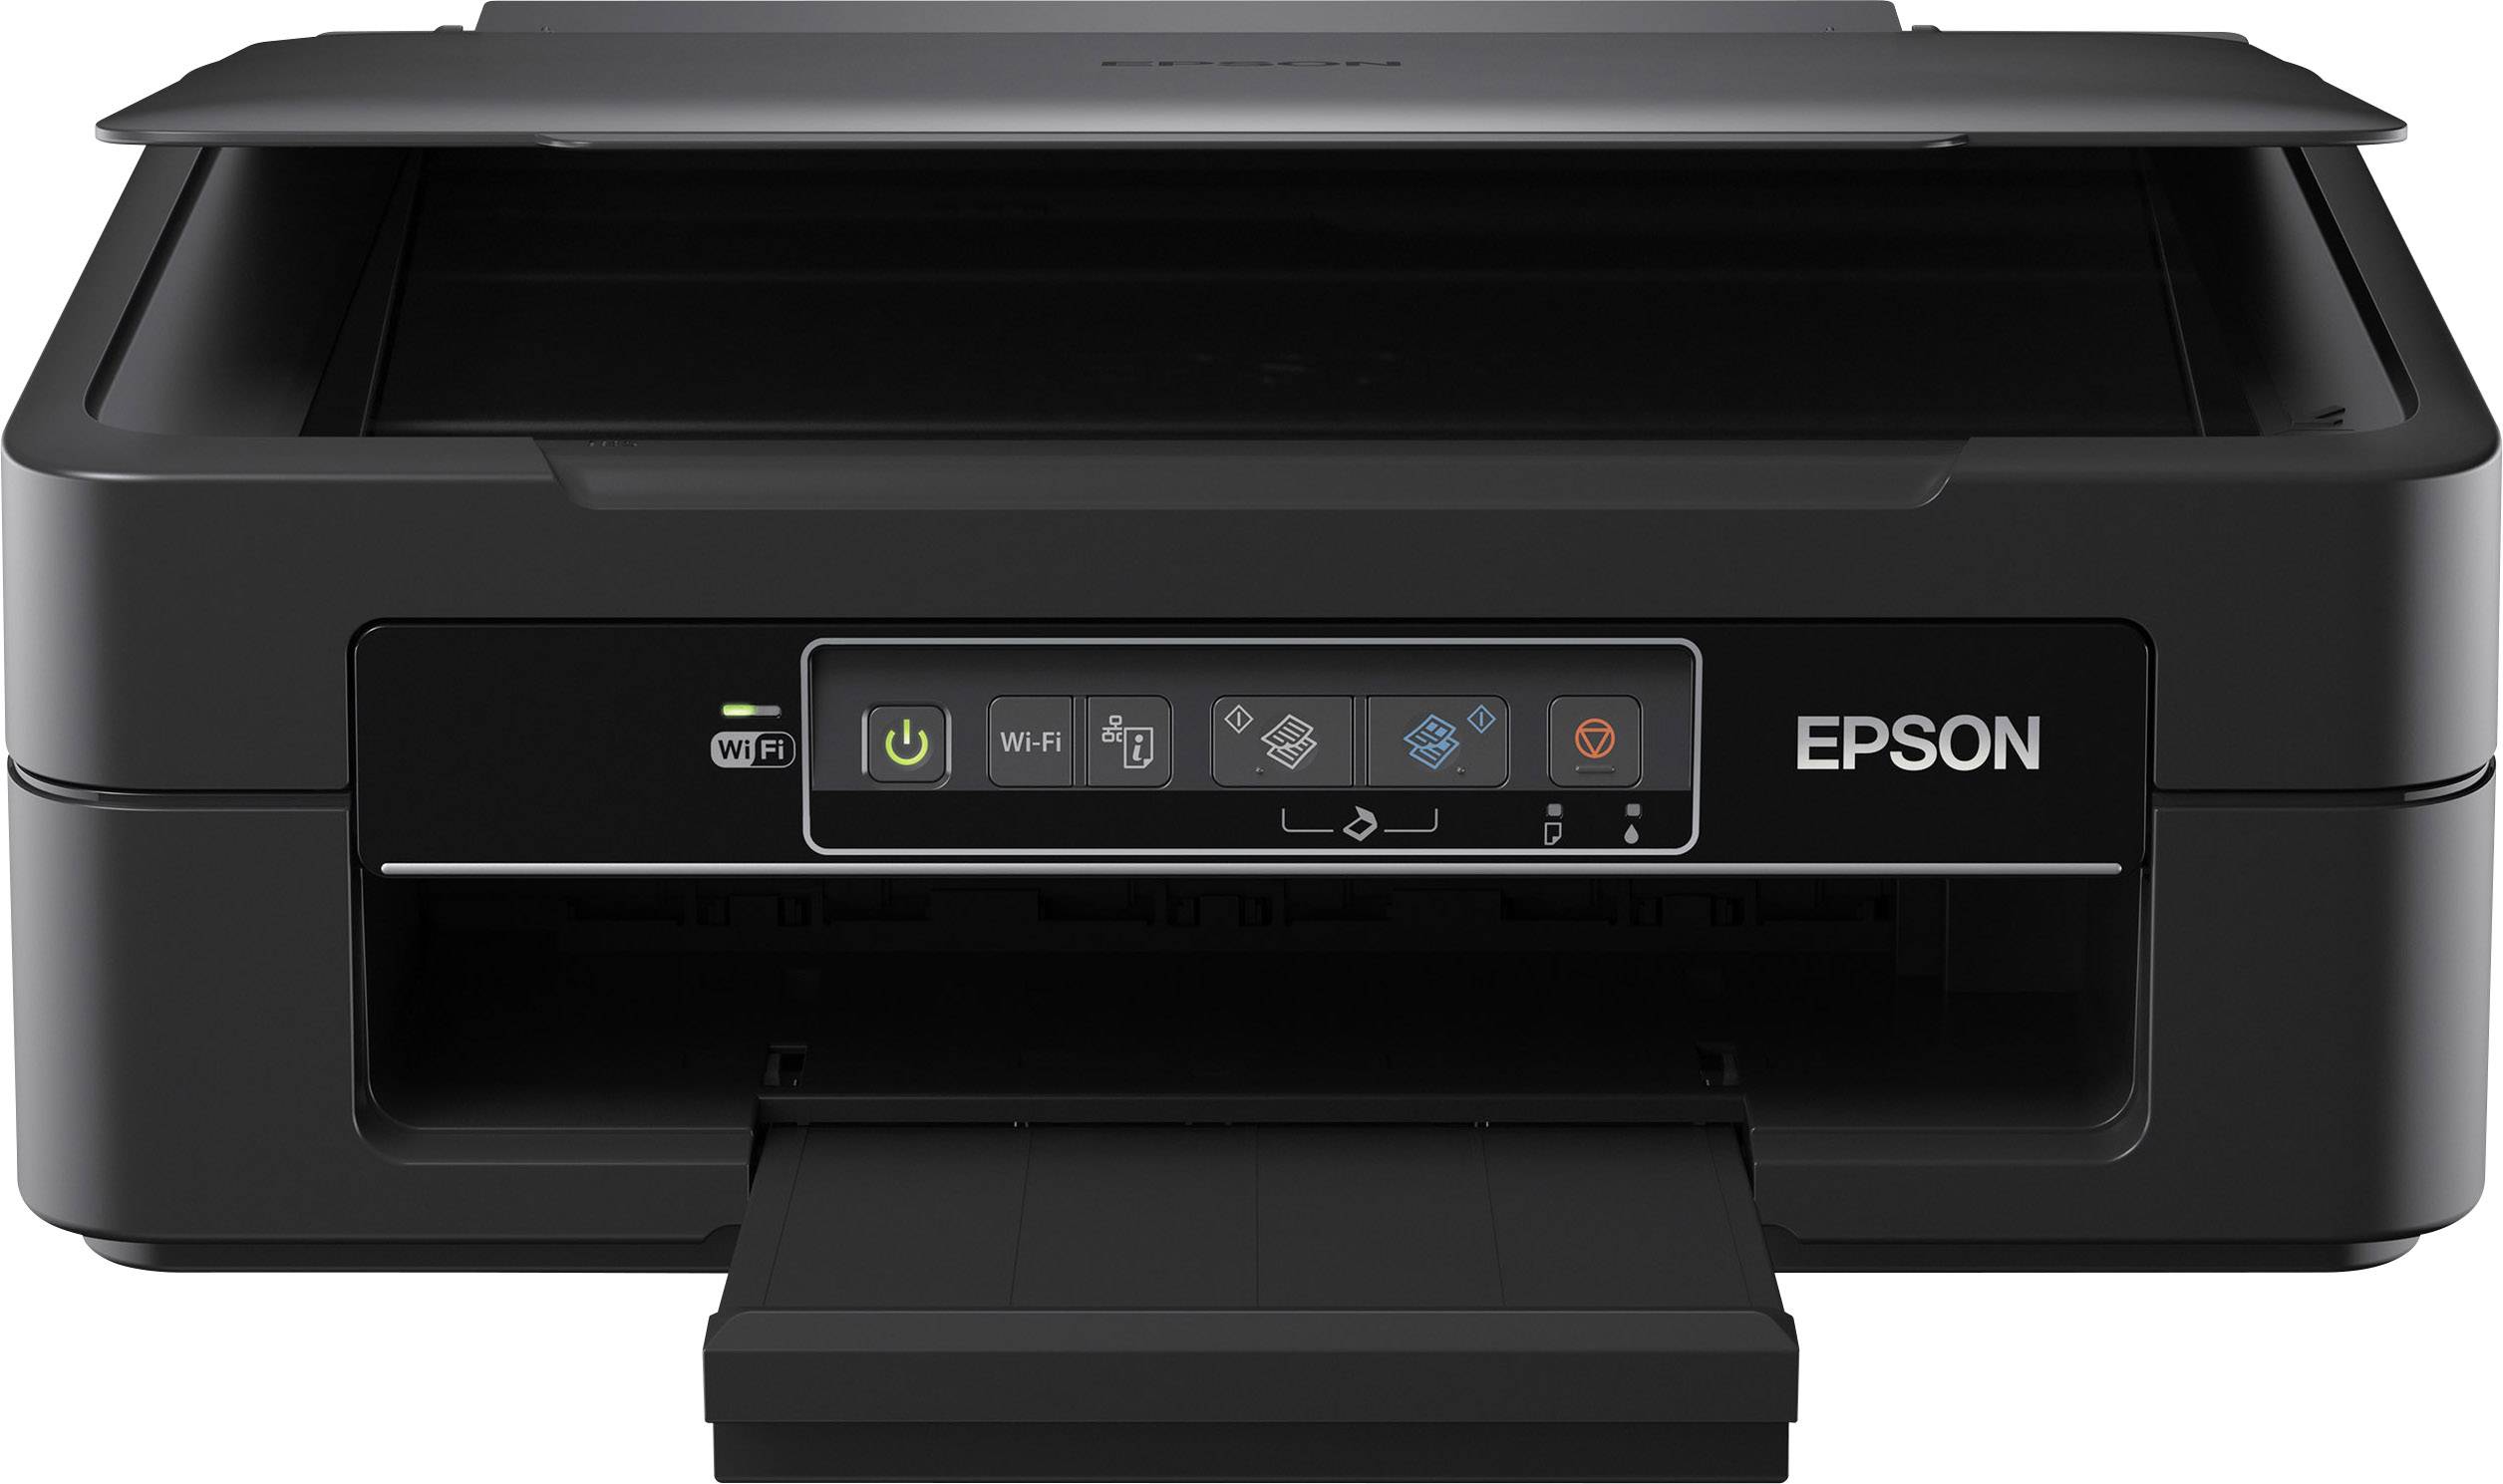 Epson xp 103. Epson XP-245. Эпсон хп103. Принтер Эпсон хр-313 сканер. Принтер Epson 1050.